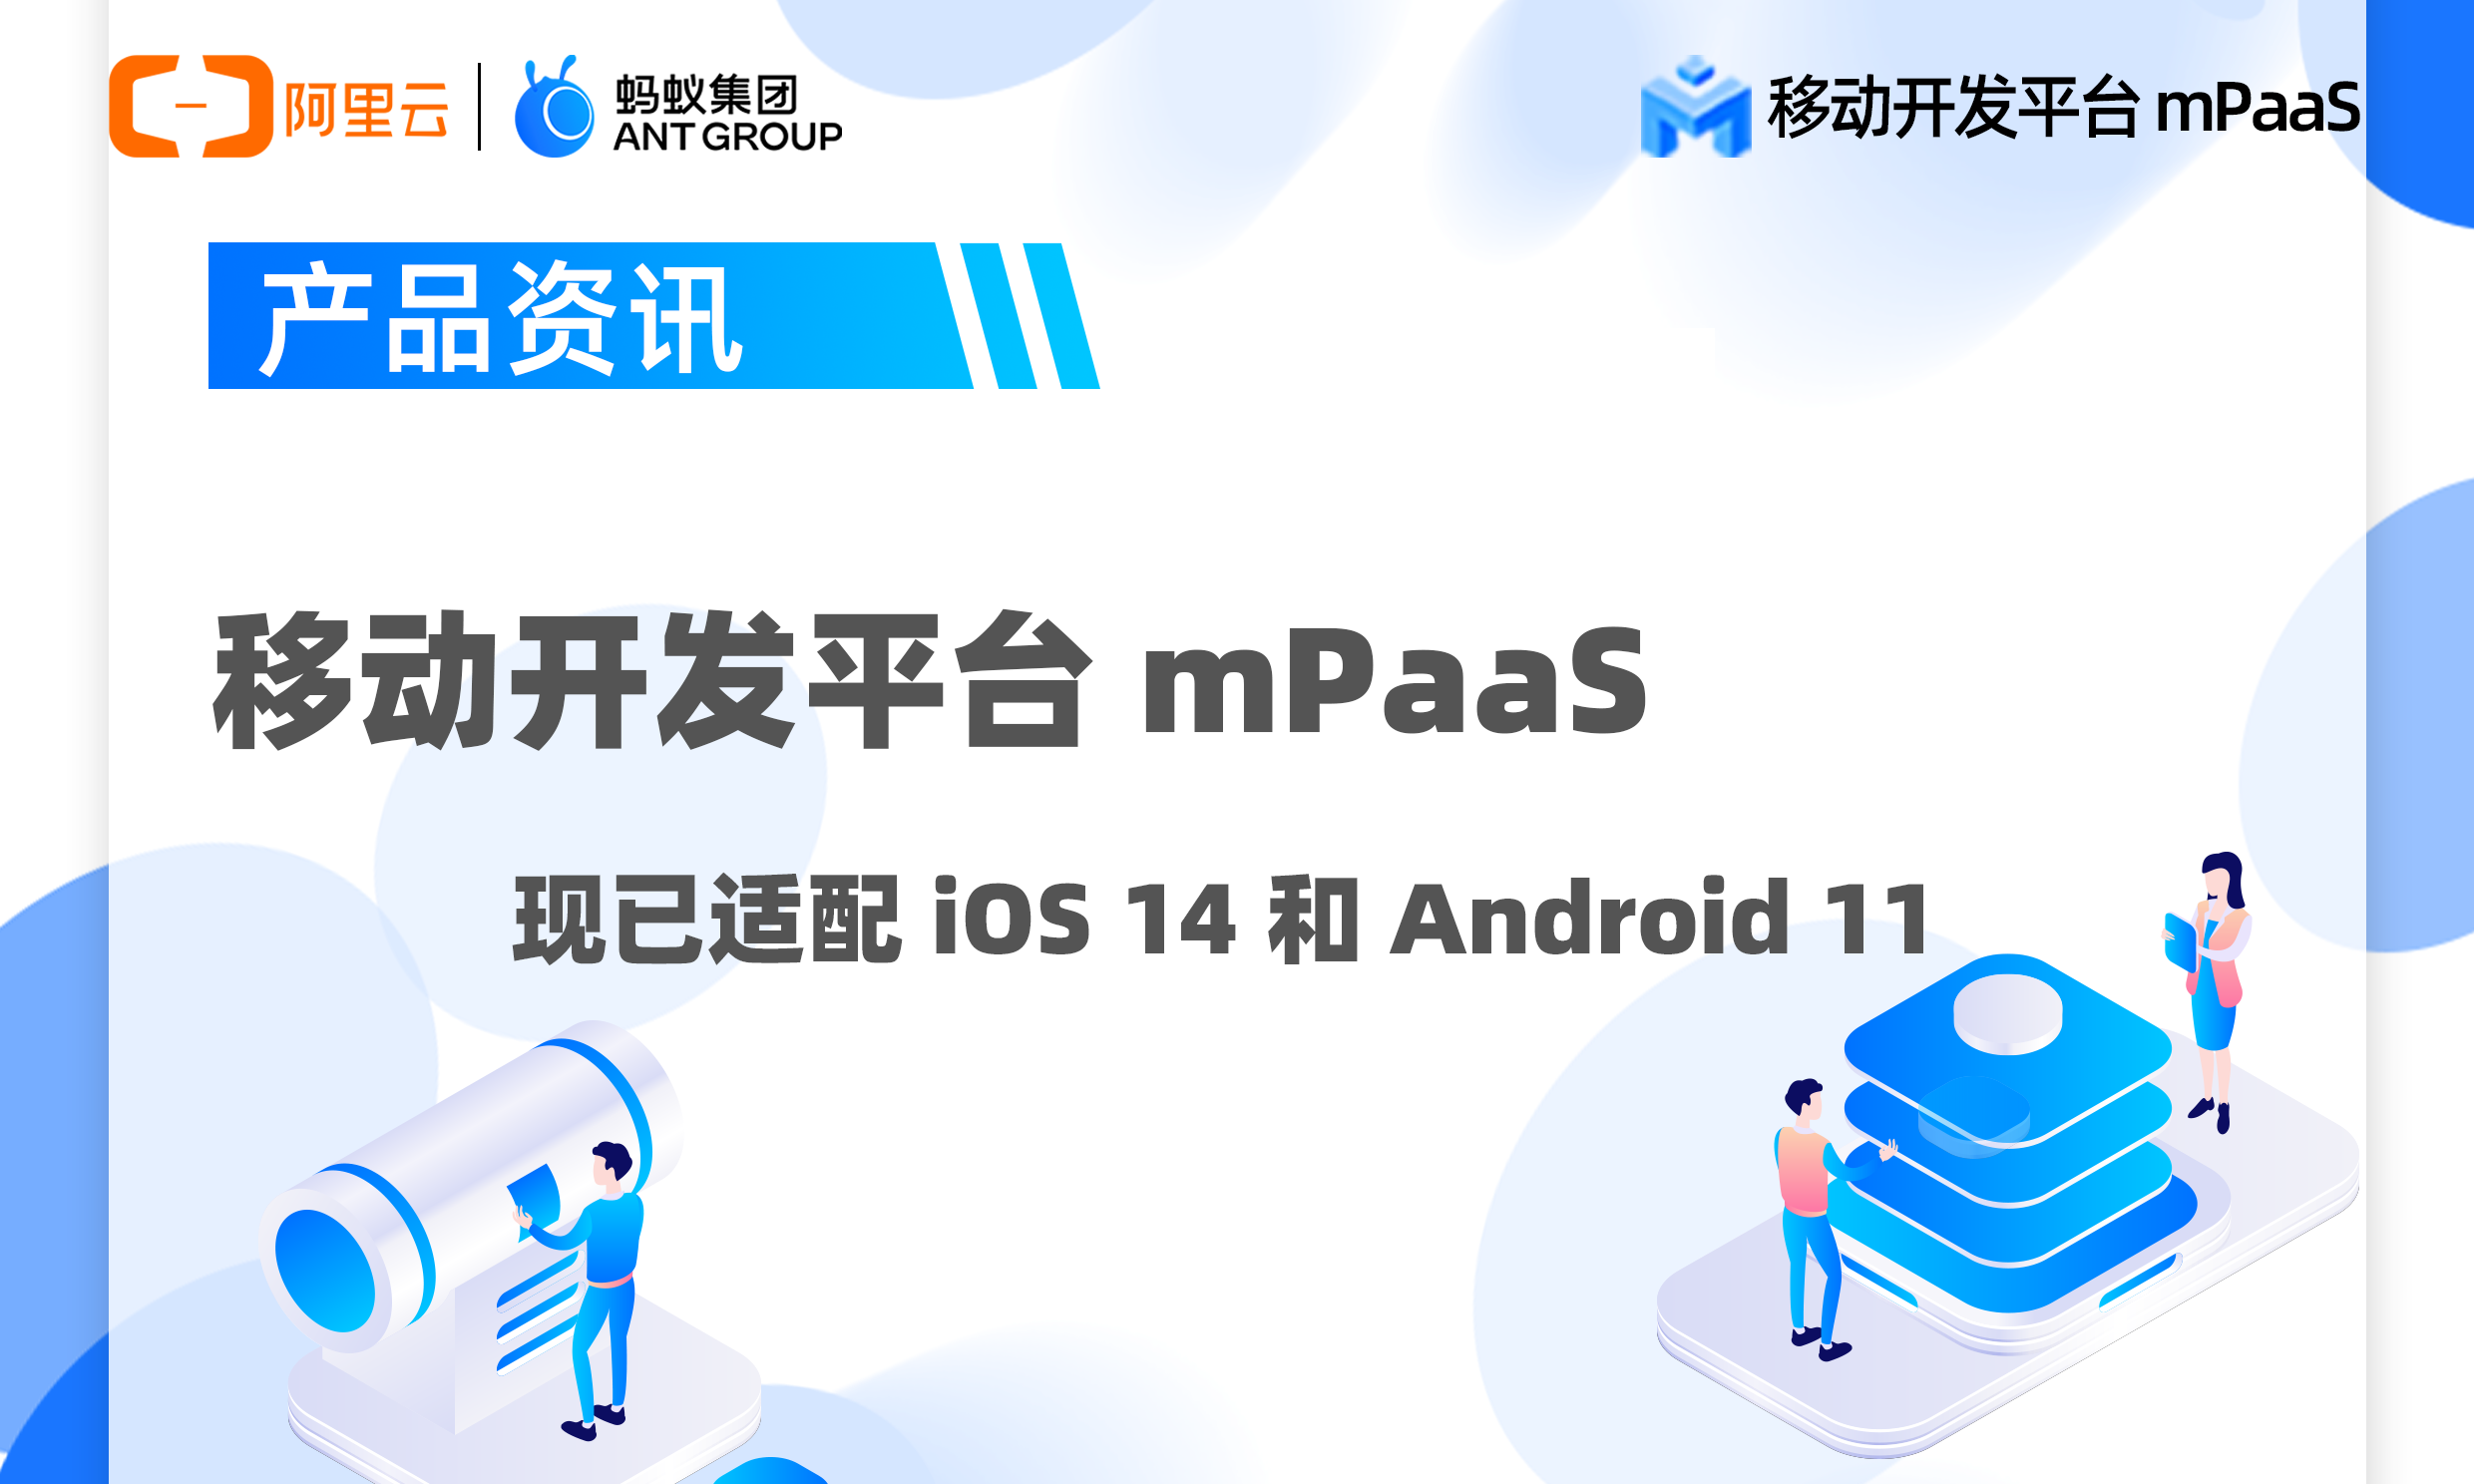 产品资讯 | mPaaS 完成 iOS 14 和 Android 11 适配